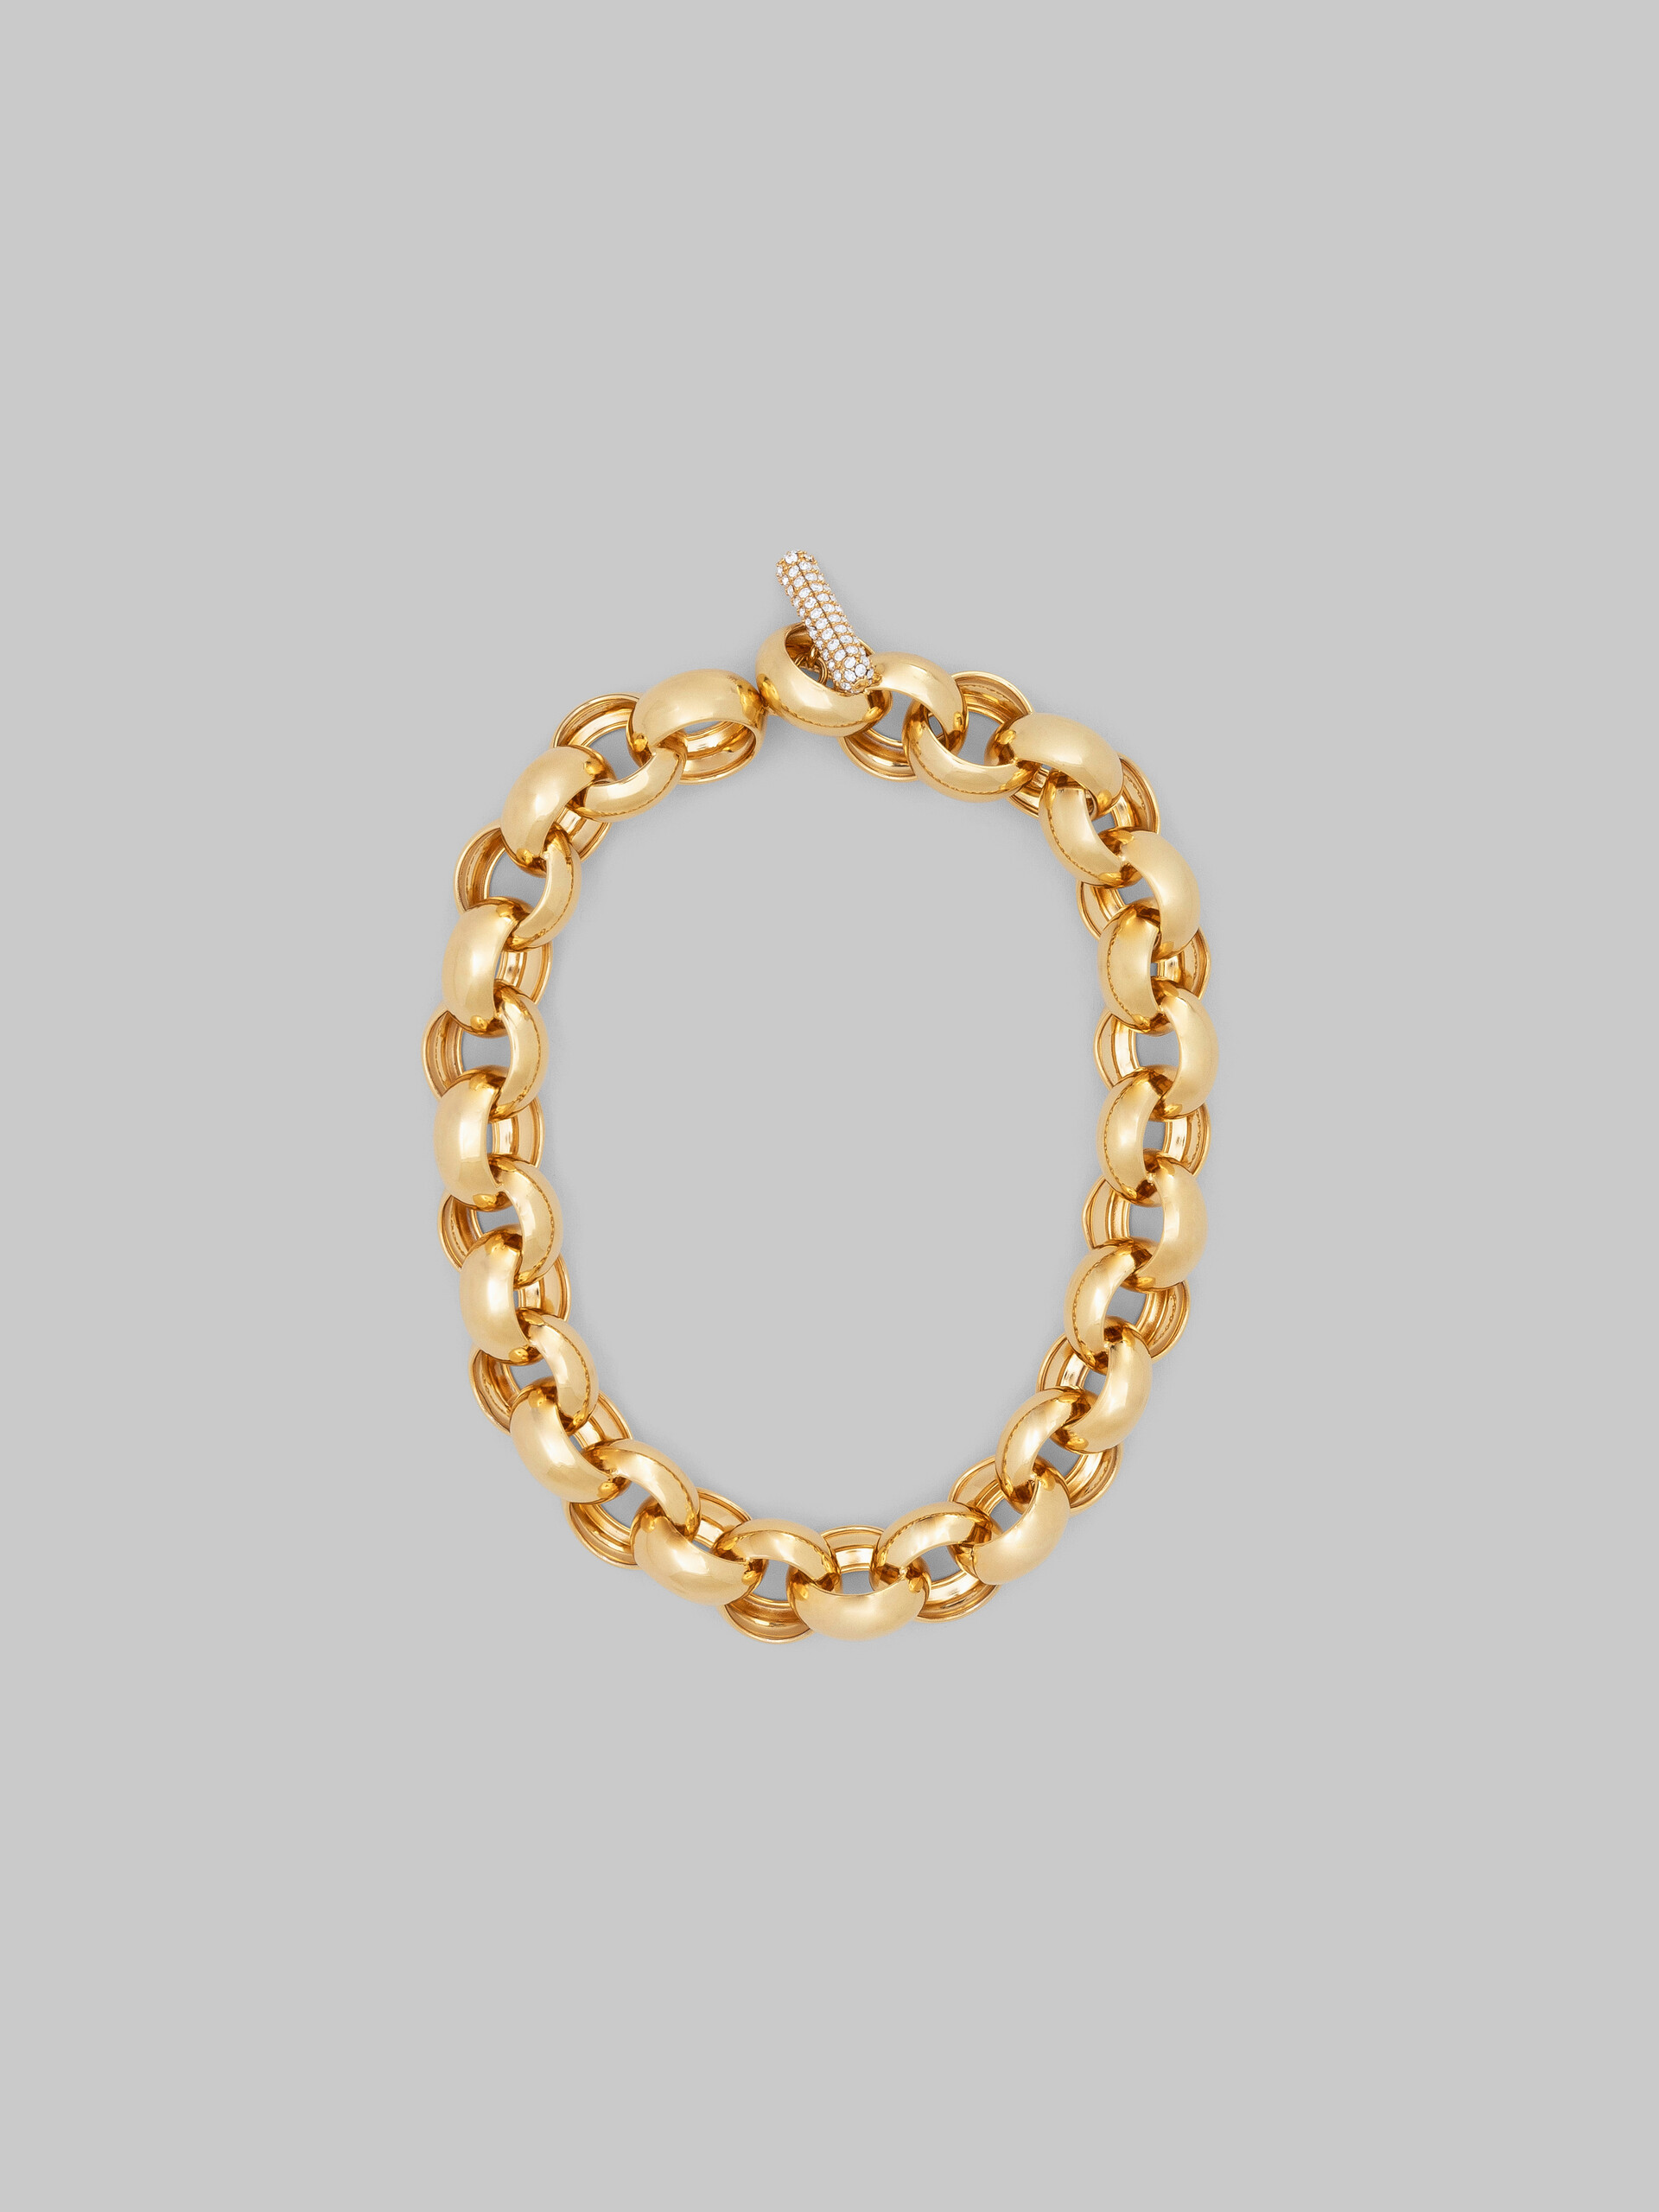 Palladium ring choker with rhinestone clasp - Necklaces - Image 1